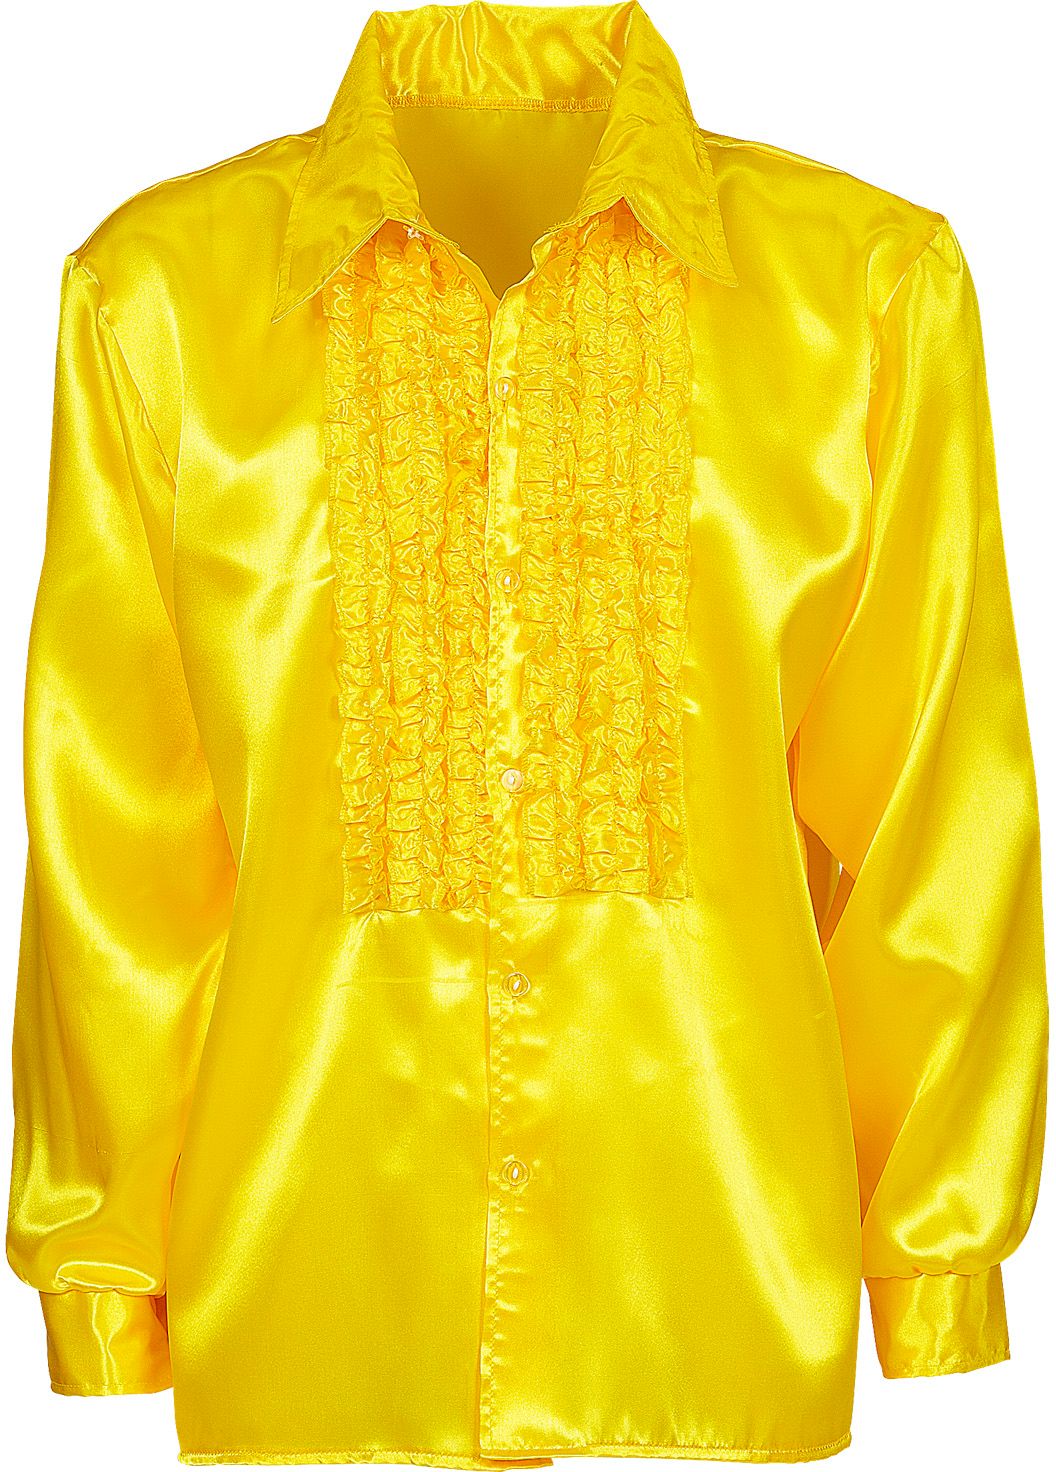 Disco blouse met ruches geel